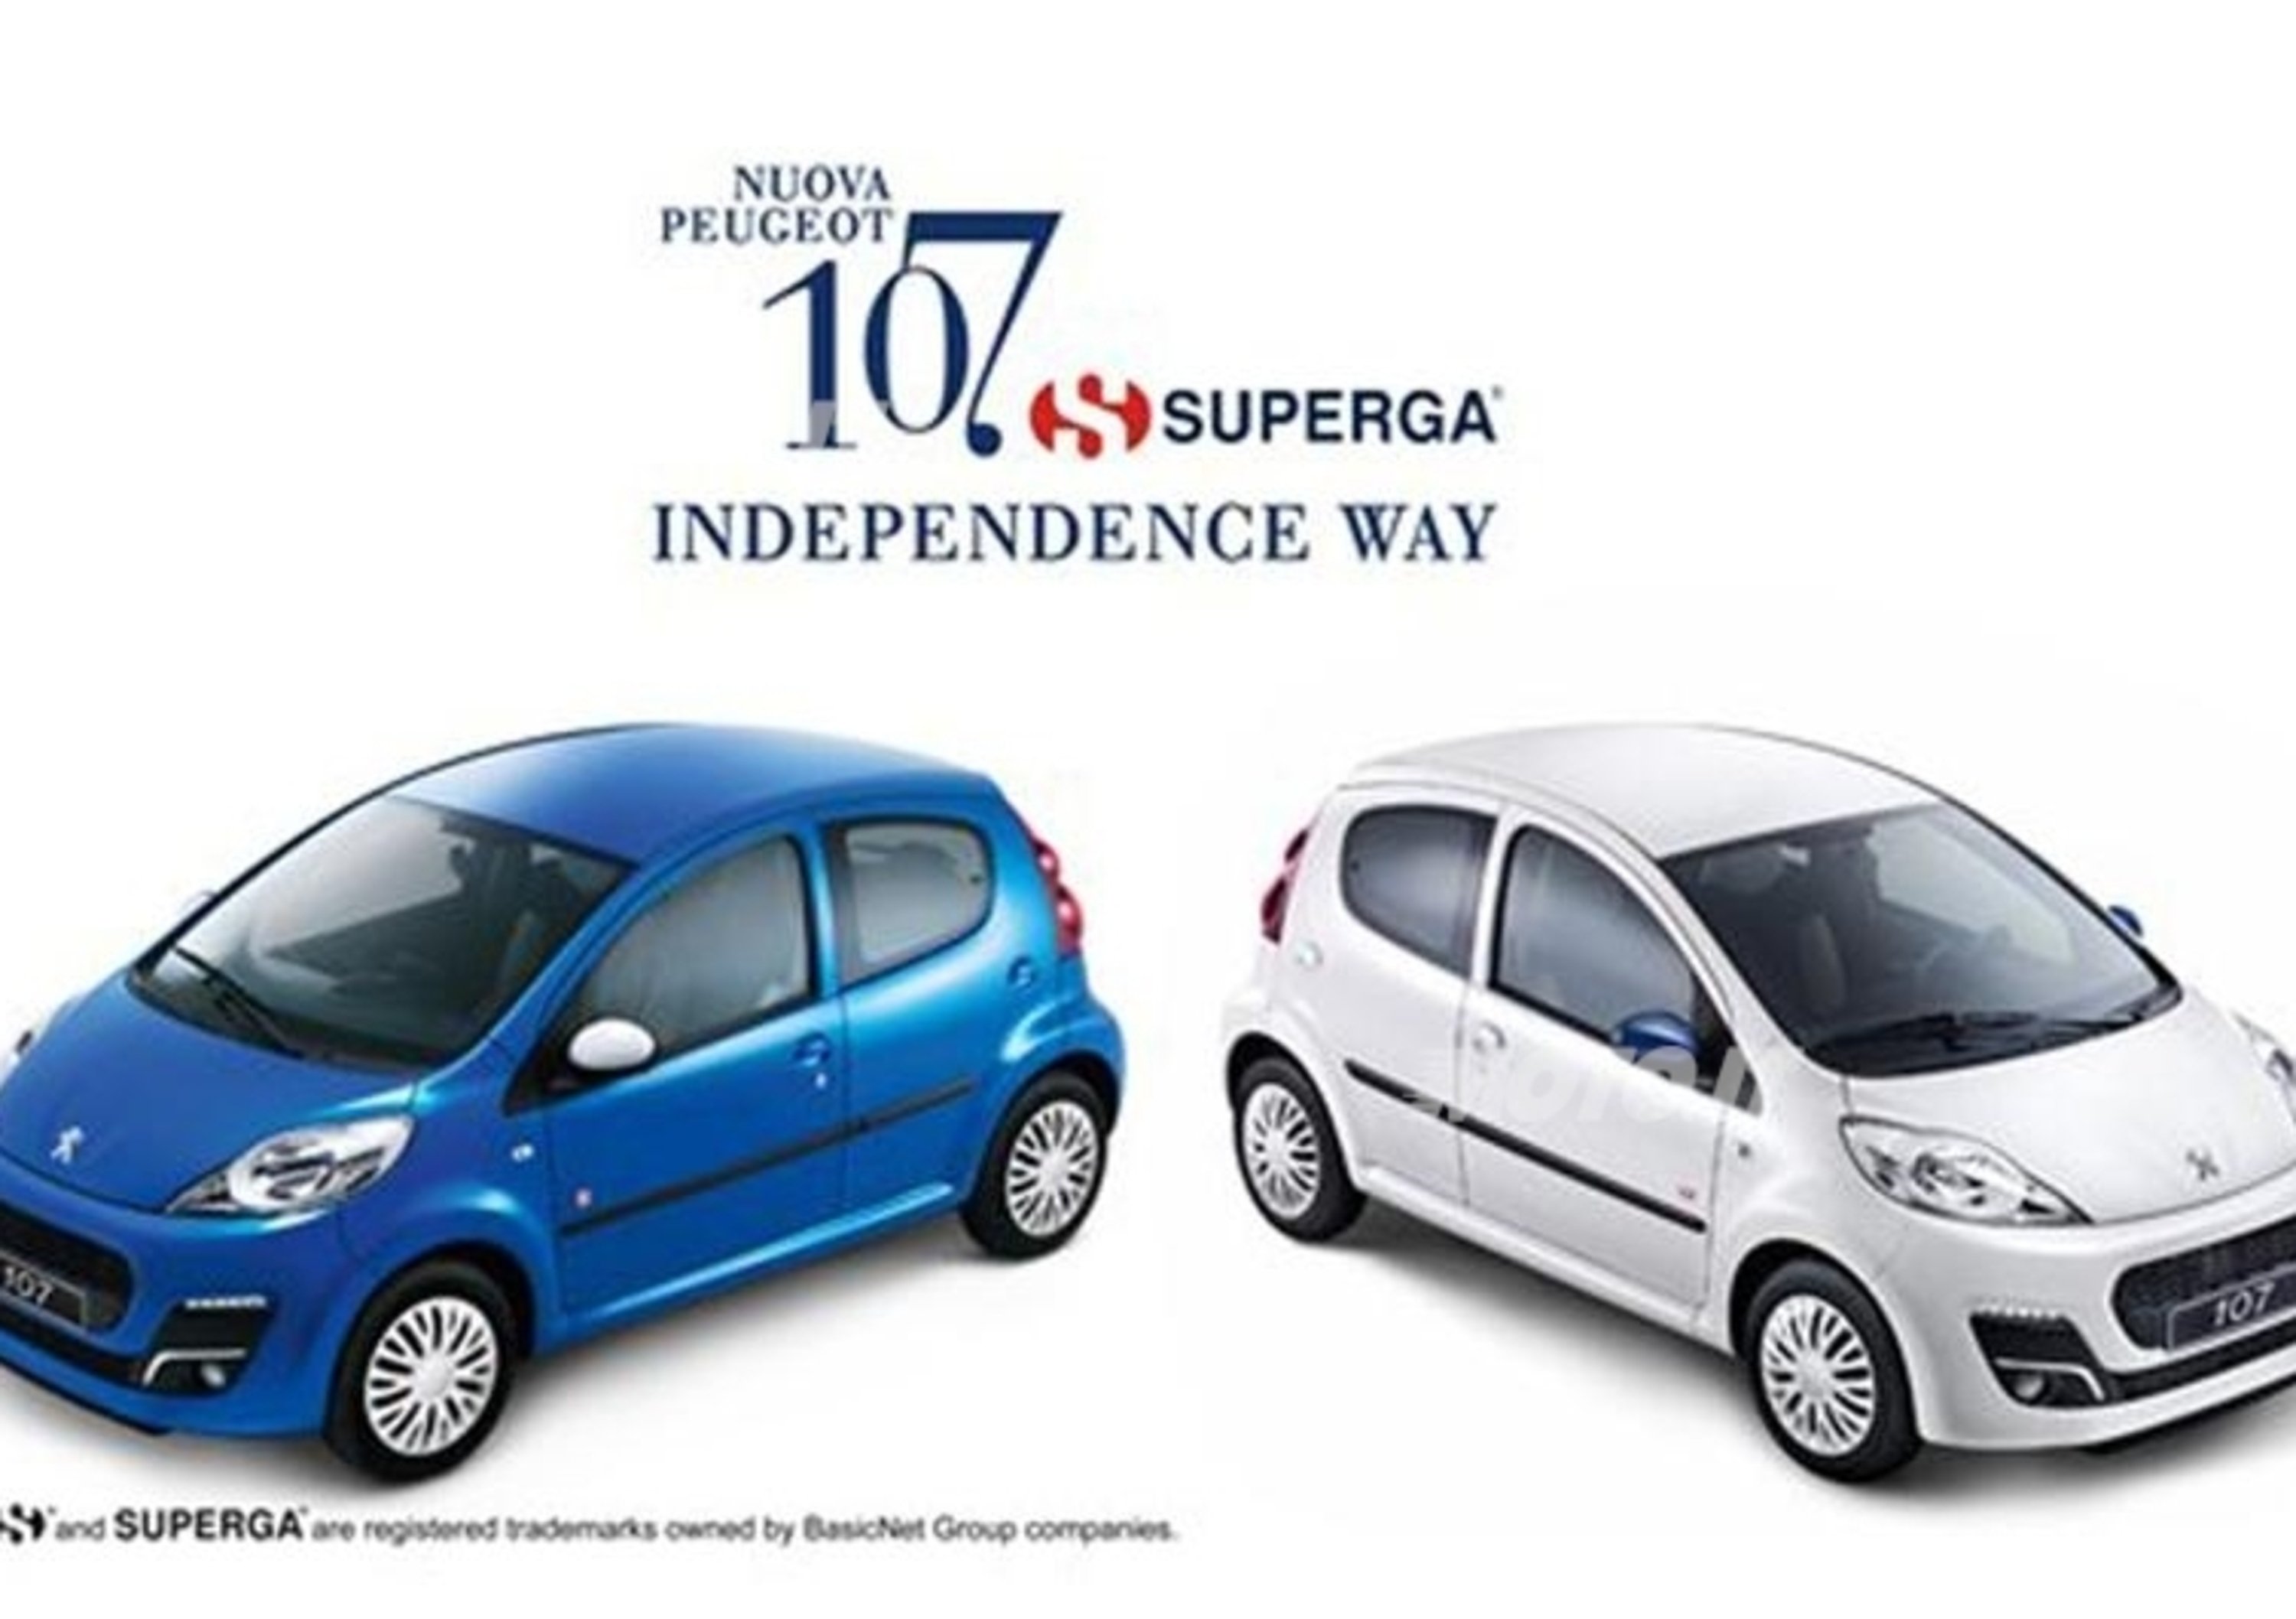 Peugeot 107 Superga - News 